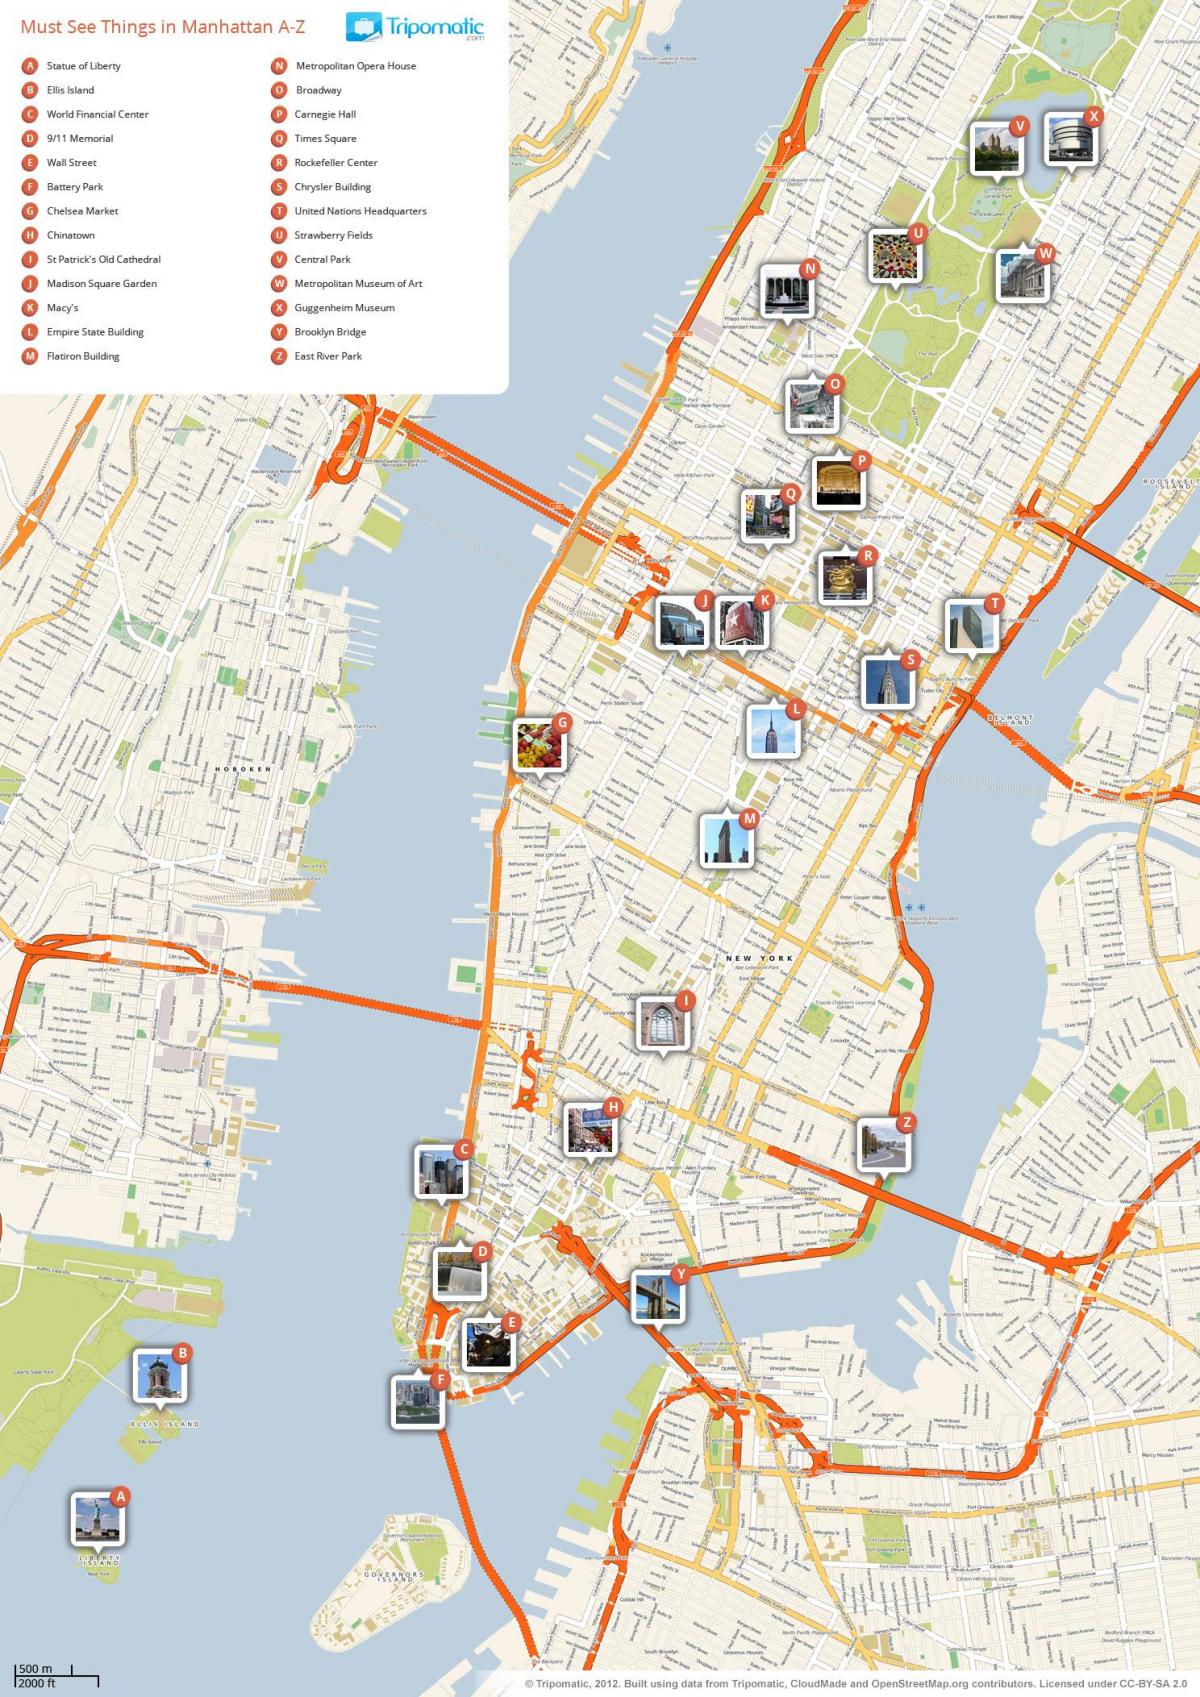 mappa di Manhattan con i punti di interesse